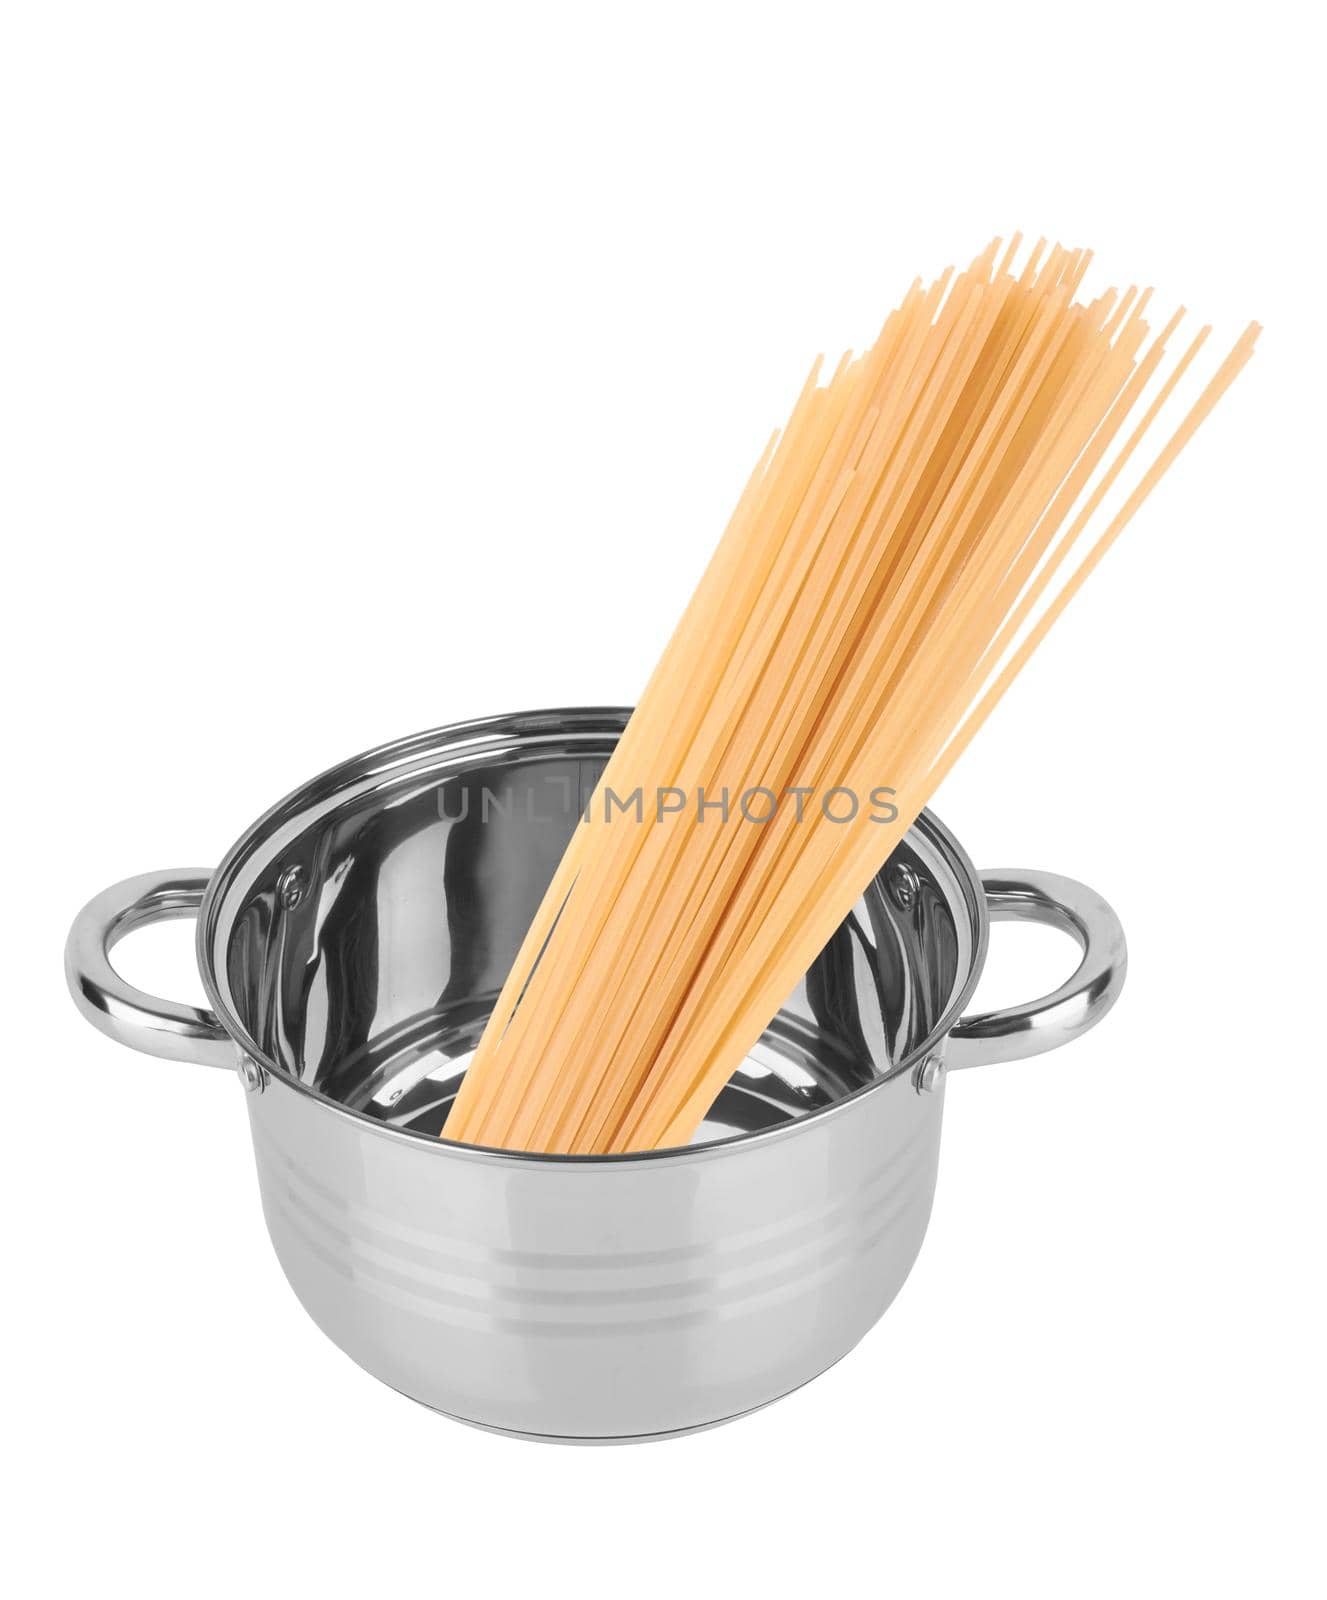 Spaghetti in a saucepan by pioneer111